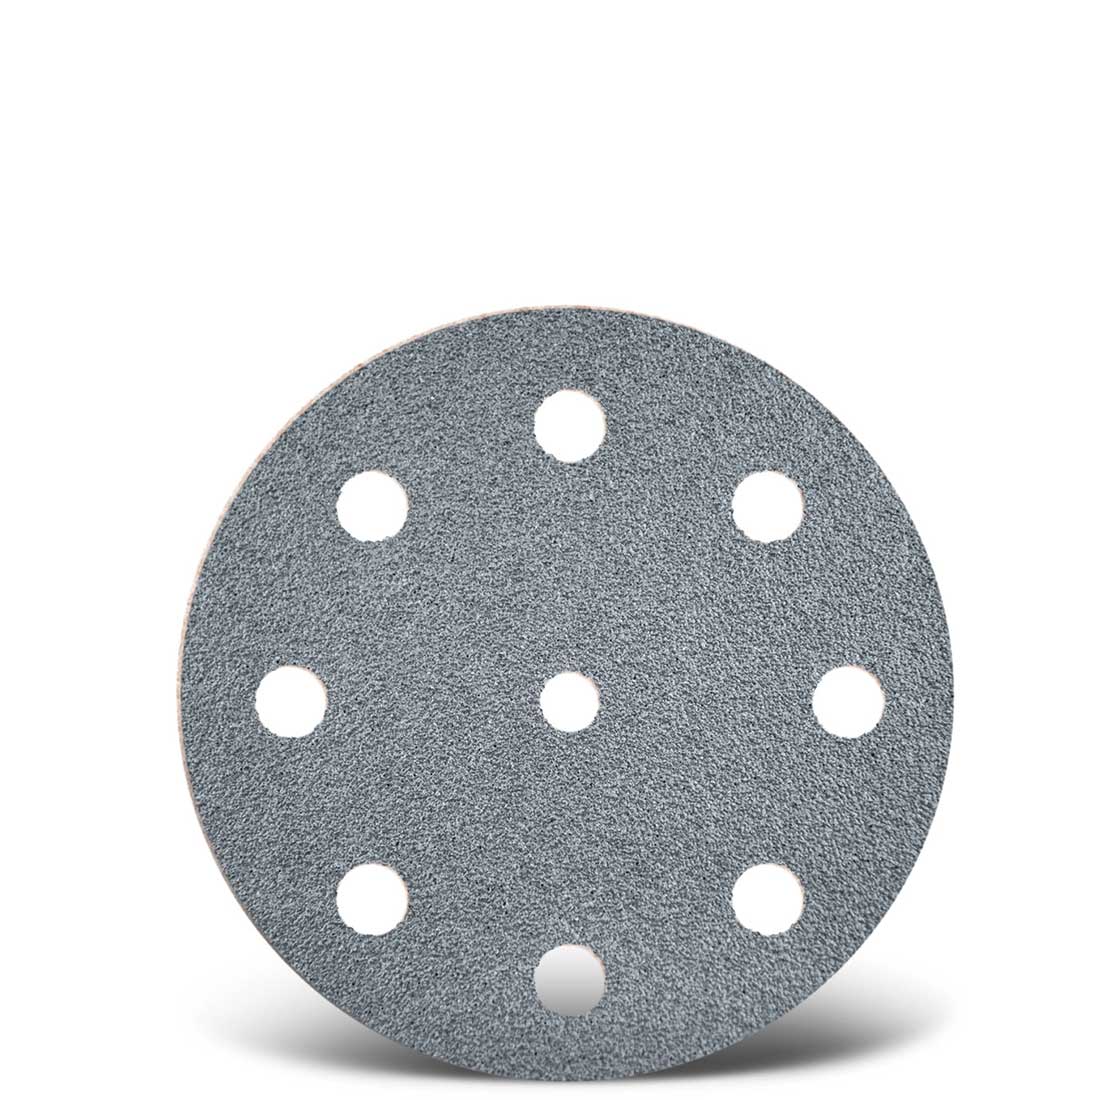 MENZER hook & loop sanding discs for random orbital sanders, G40–400, Ø 125 mm / 9 hole / semi-friable aluminium oxide